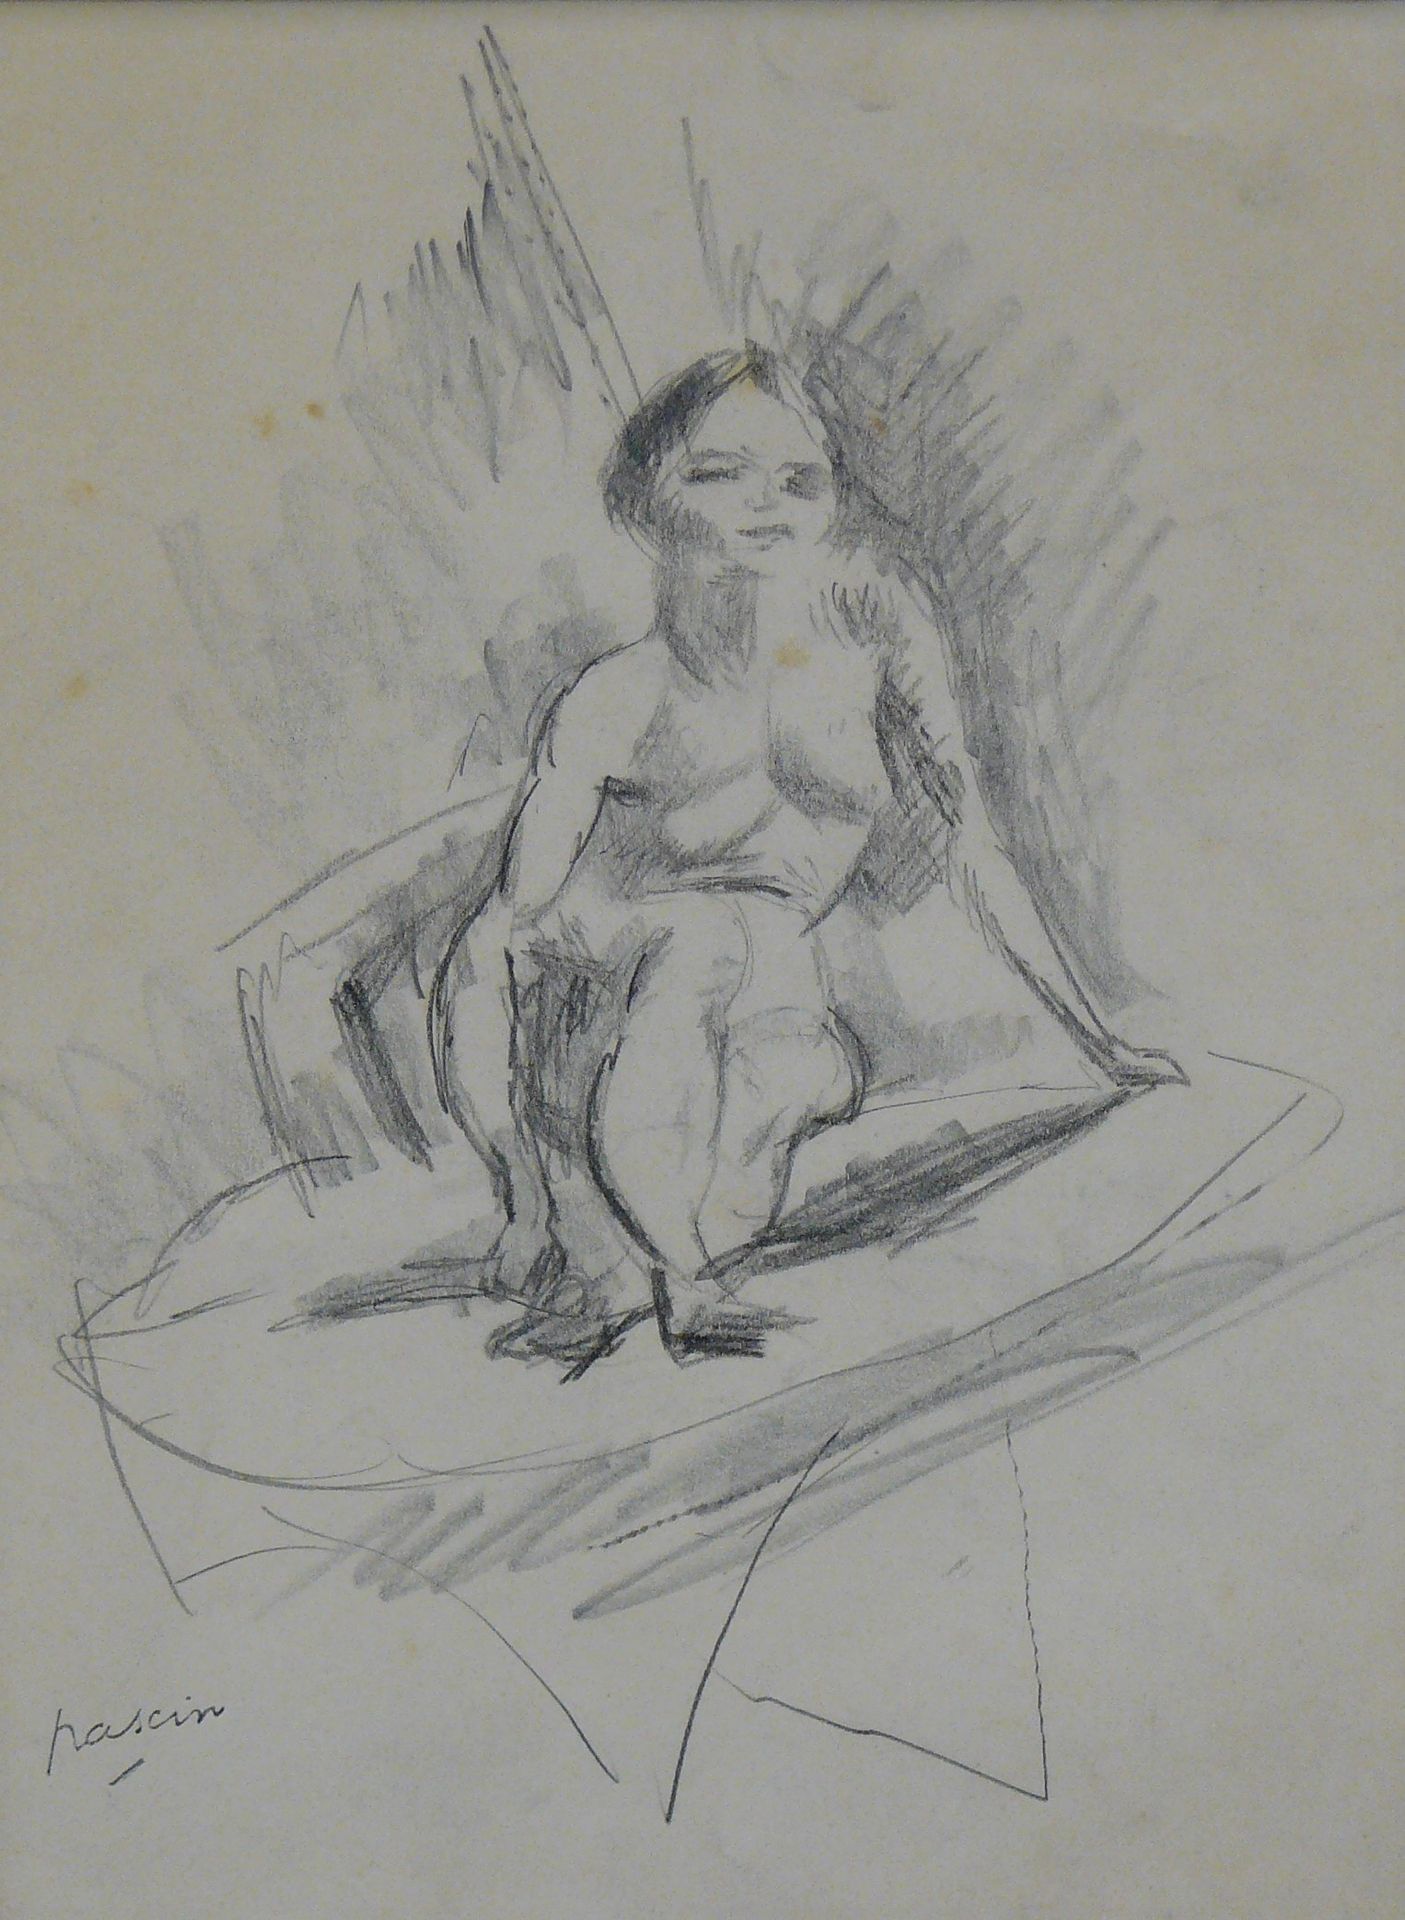 PASCIN 儒勒-帕斯金（1885-1930）：年轻的裸体女人，画上有左下角的签名章 - 22 x 16厘米。背面是一个裸体女人的研究，画上有朱尔斯-帕斯金工&hellip;